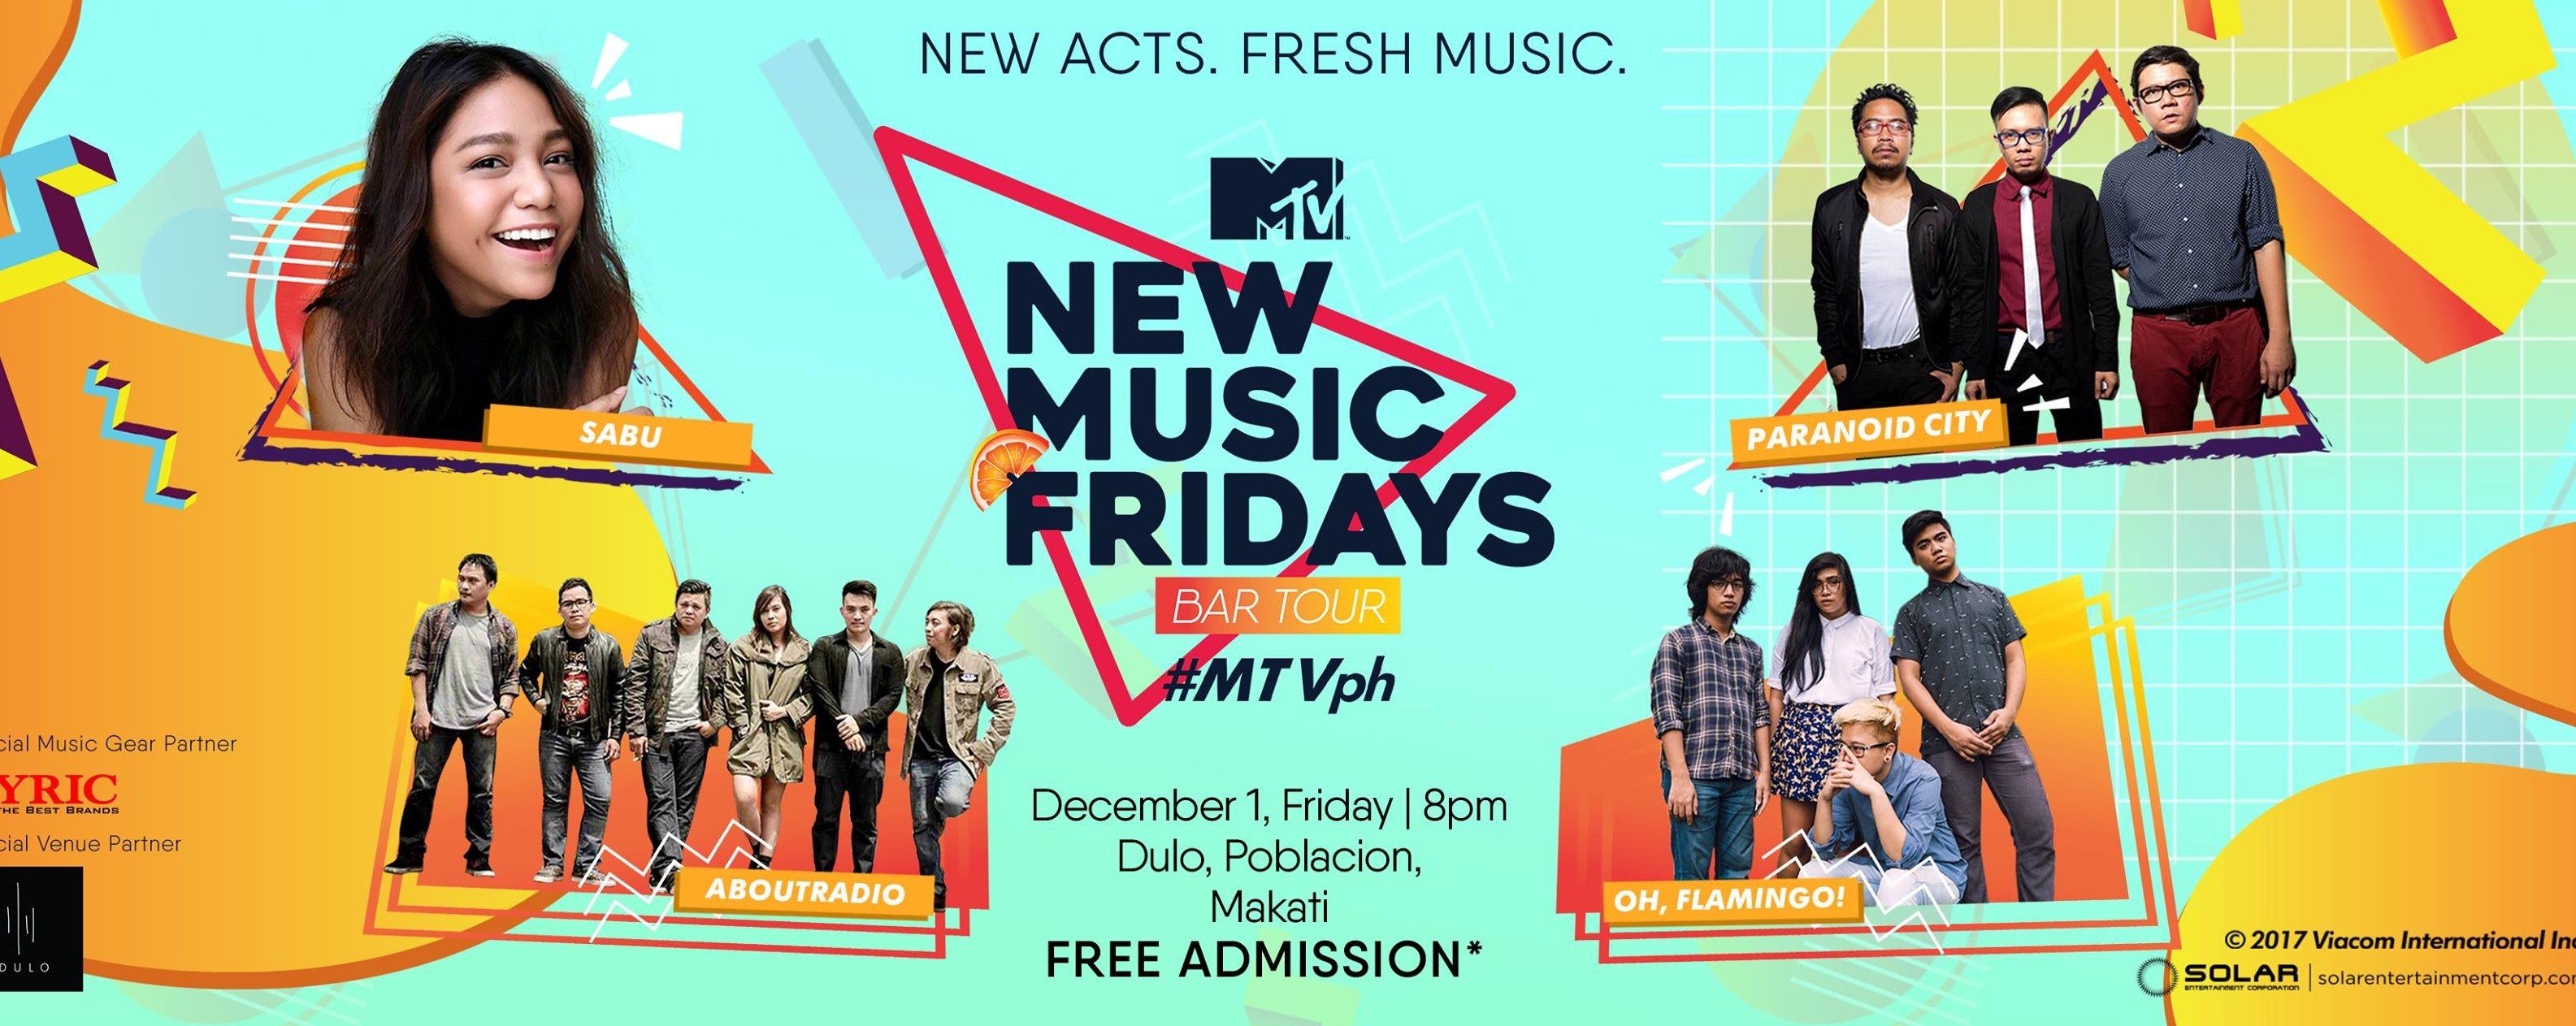 MTV New Music Fridays Bar Tour